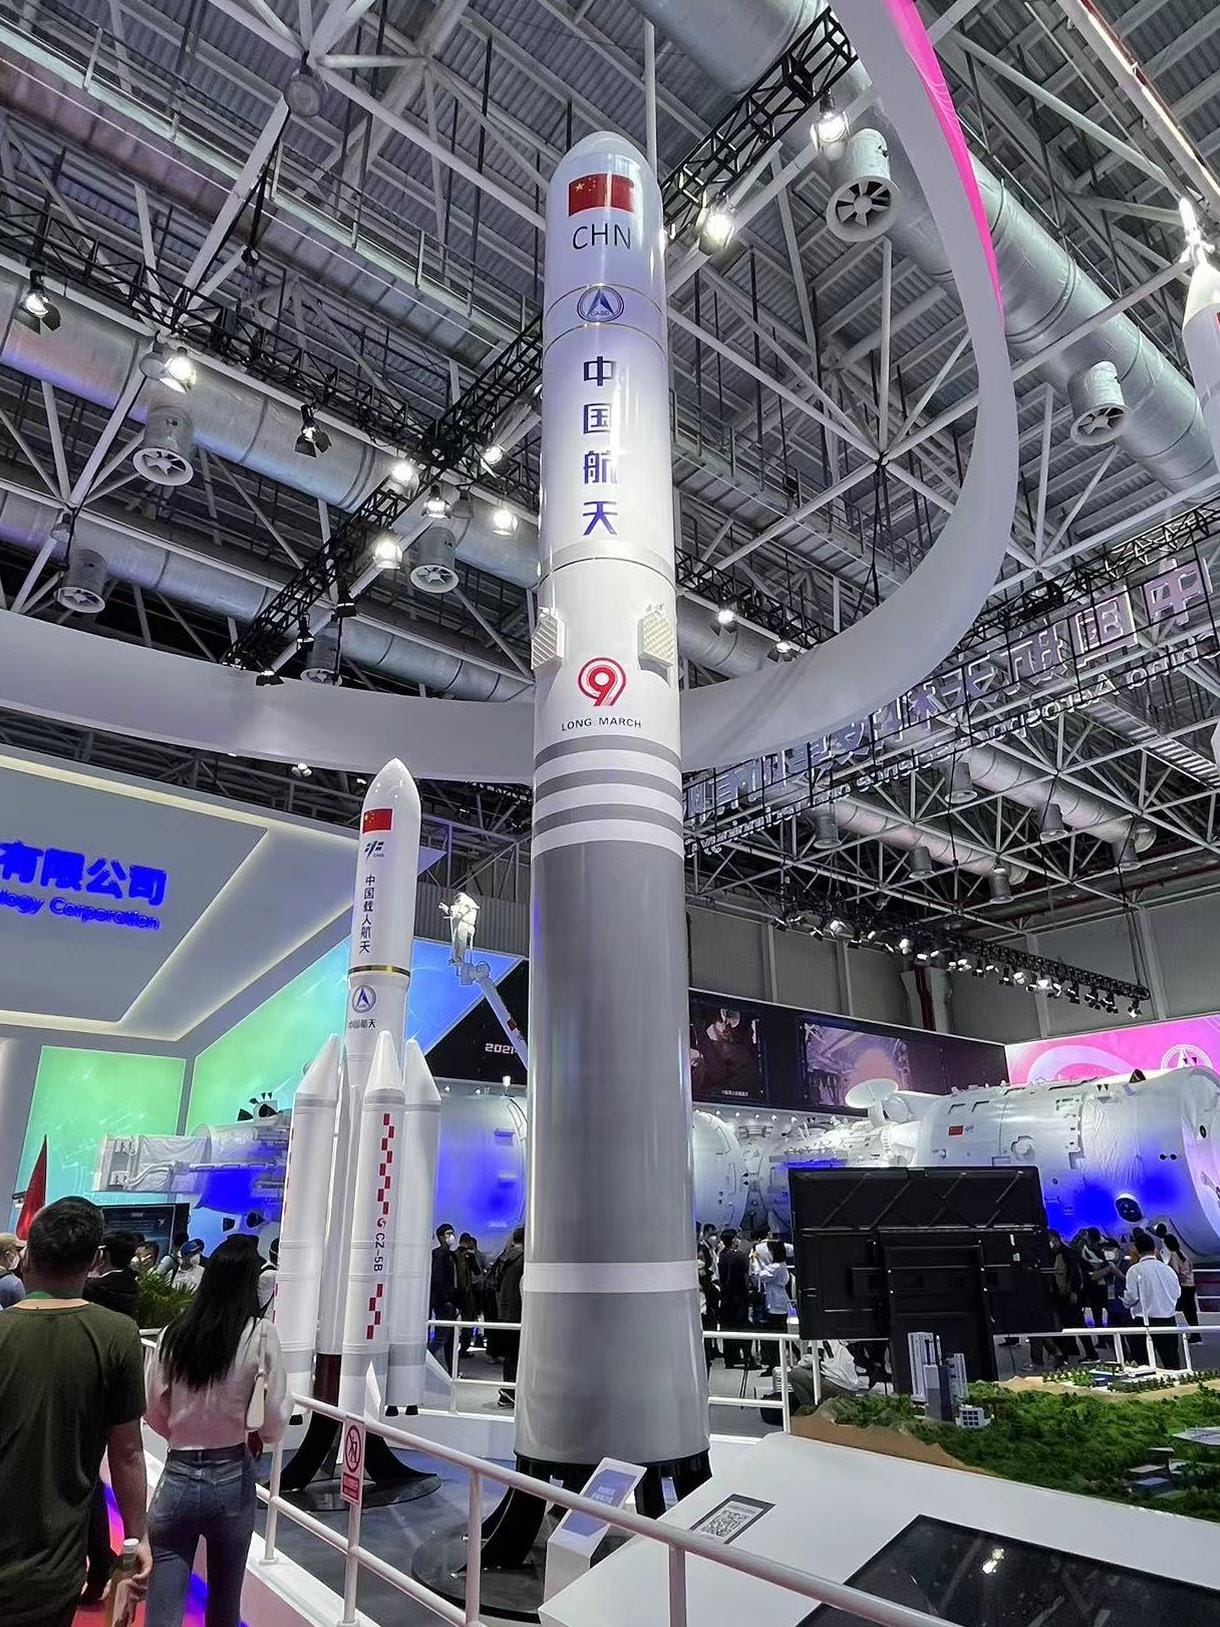 The Long March 9 rocket scale mockup in Zhuhai at the 2022 Airshow China. ©Shujianyang/Wikimedia Commons